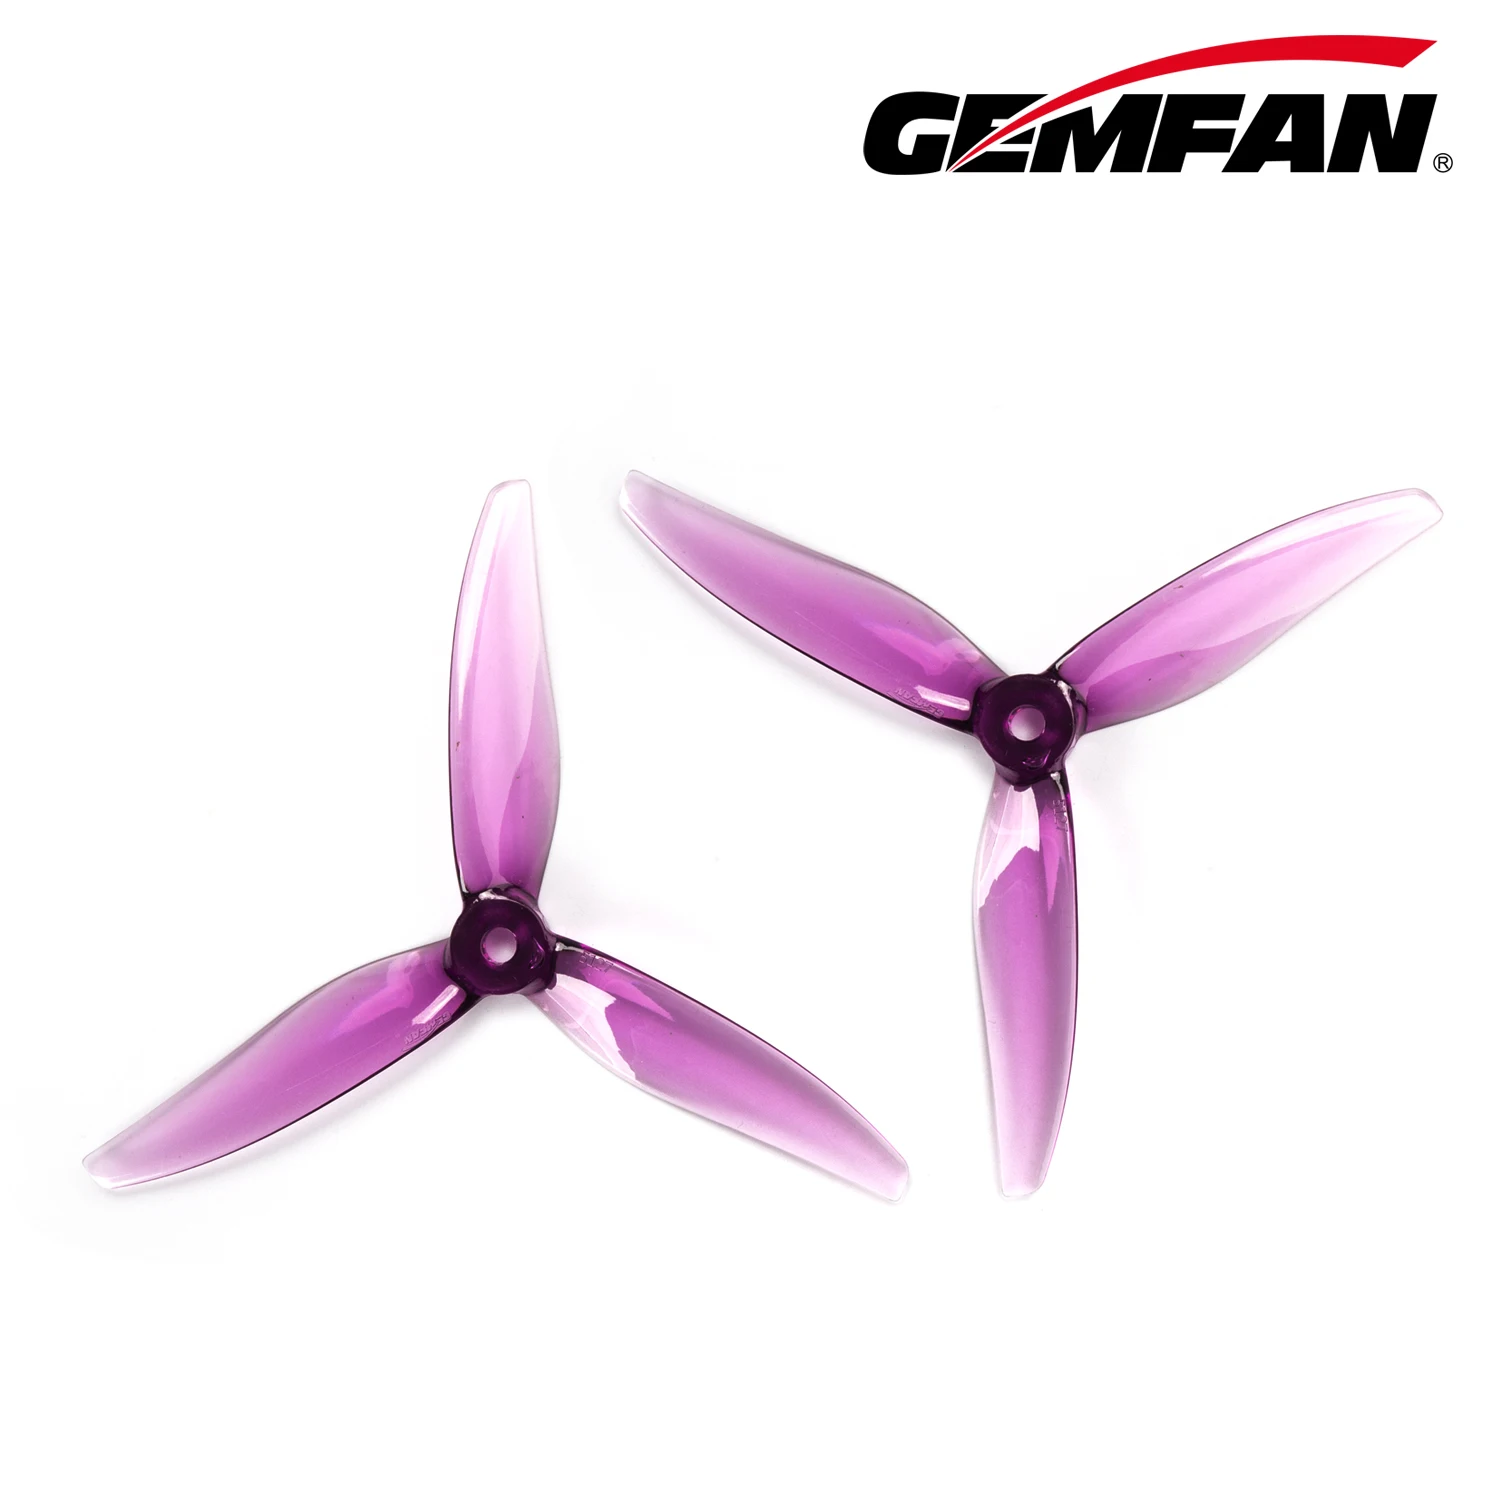 Gemfan Hurricane 5127 3-blades Purple PC propeller